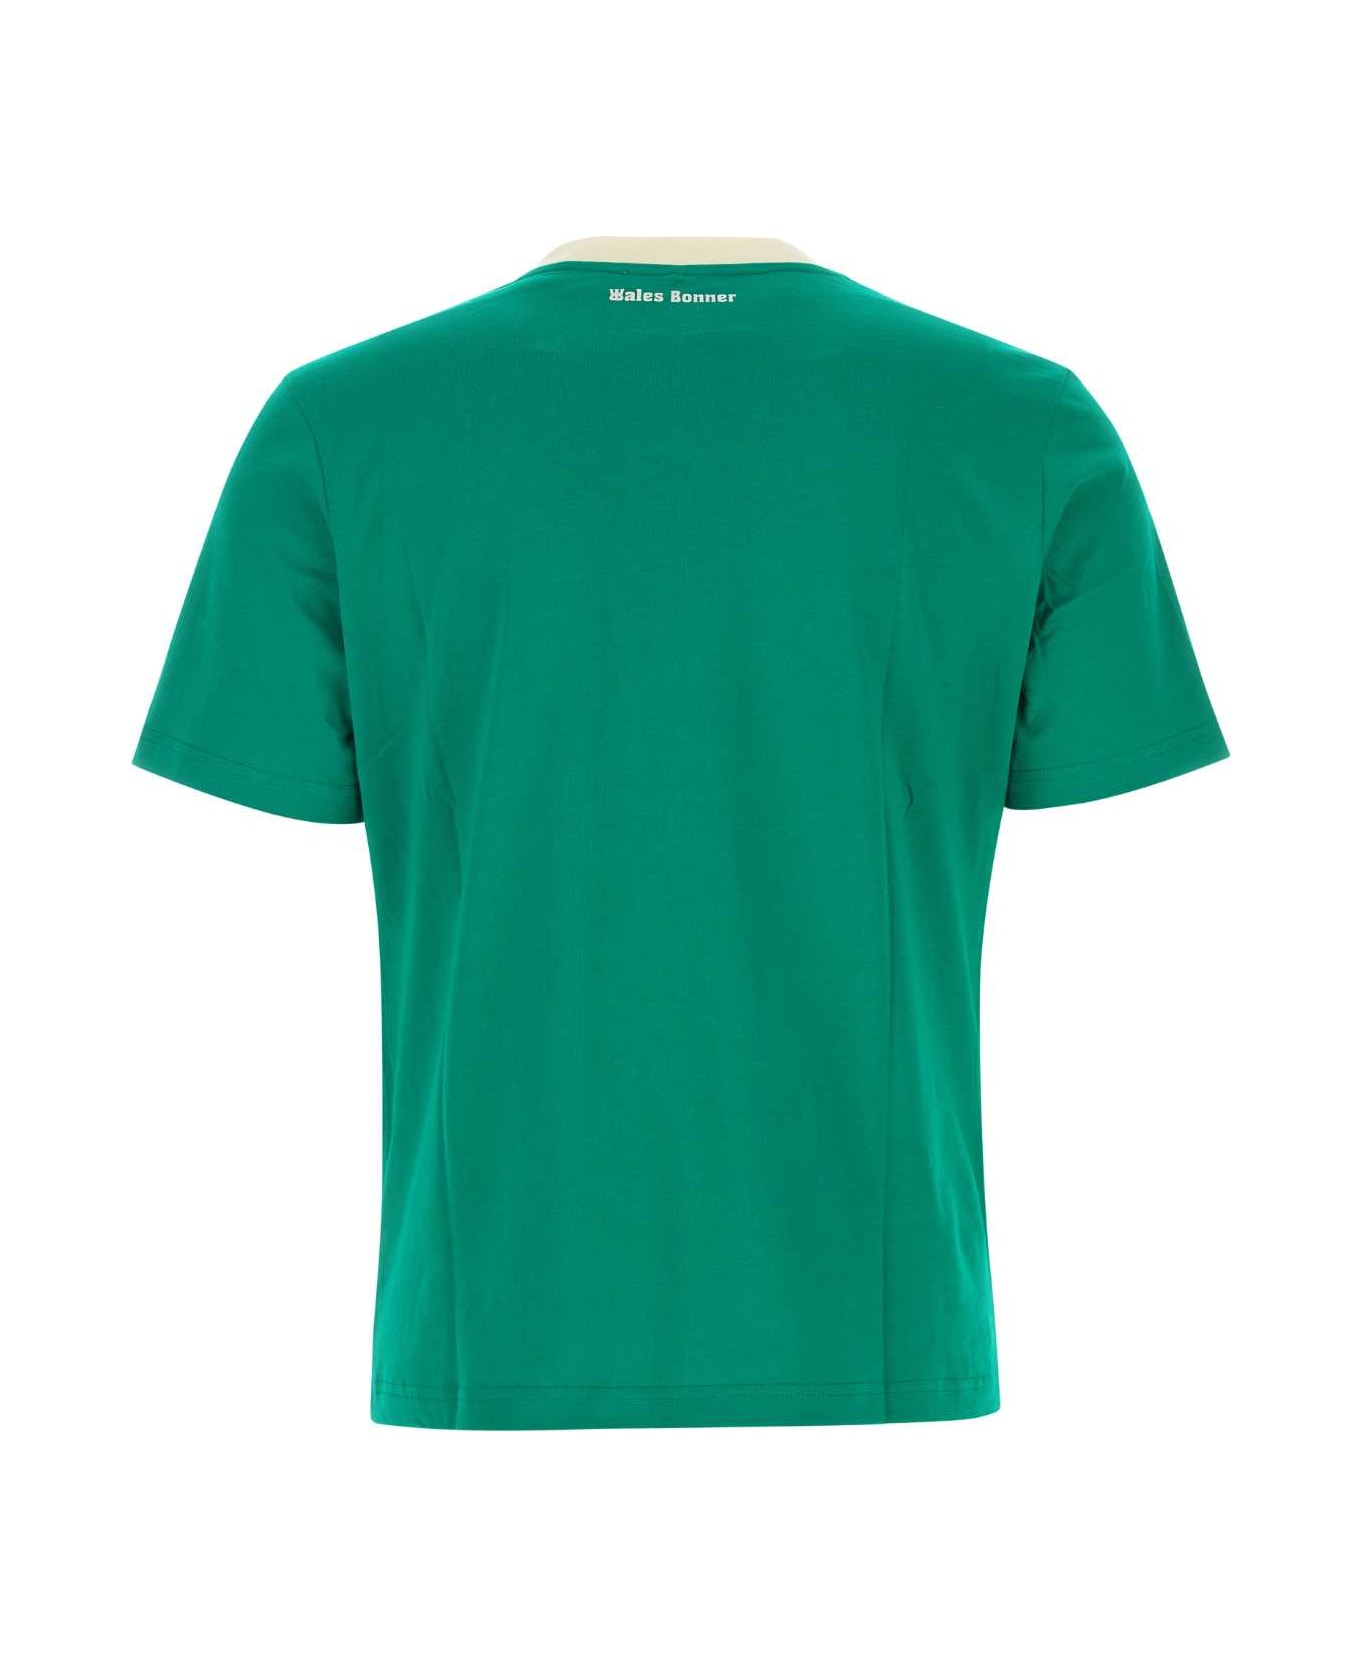 Wales Bonner Green Cotton Resilience T-shirt - GREEN